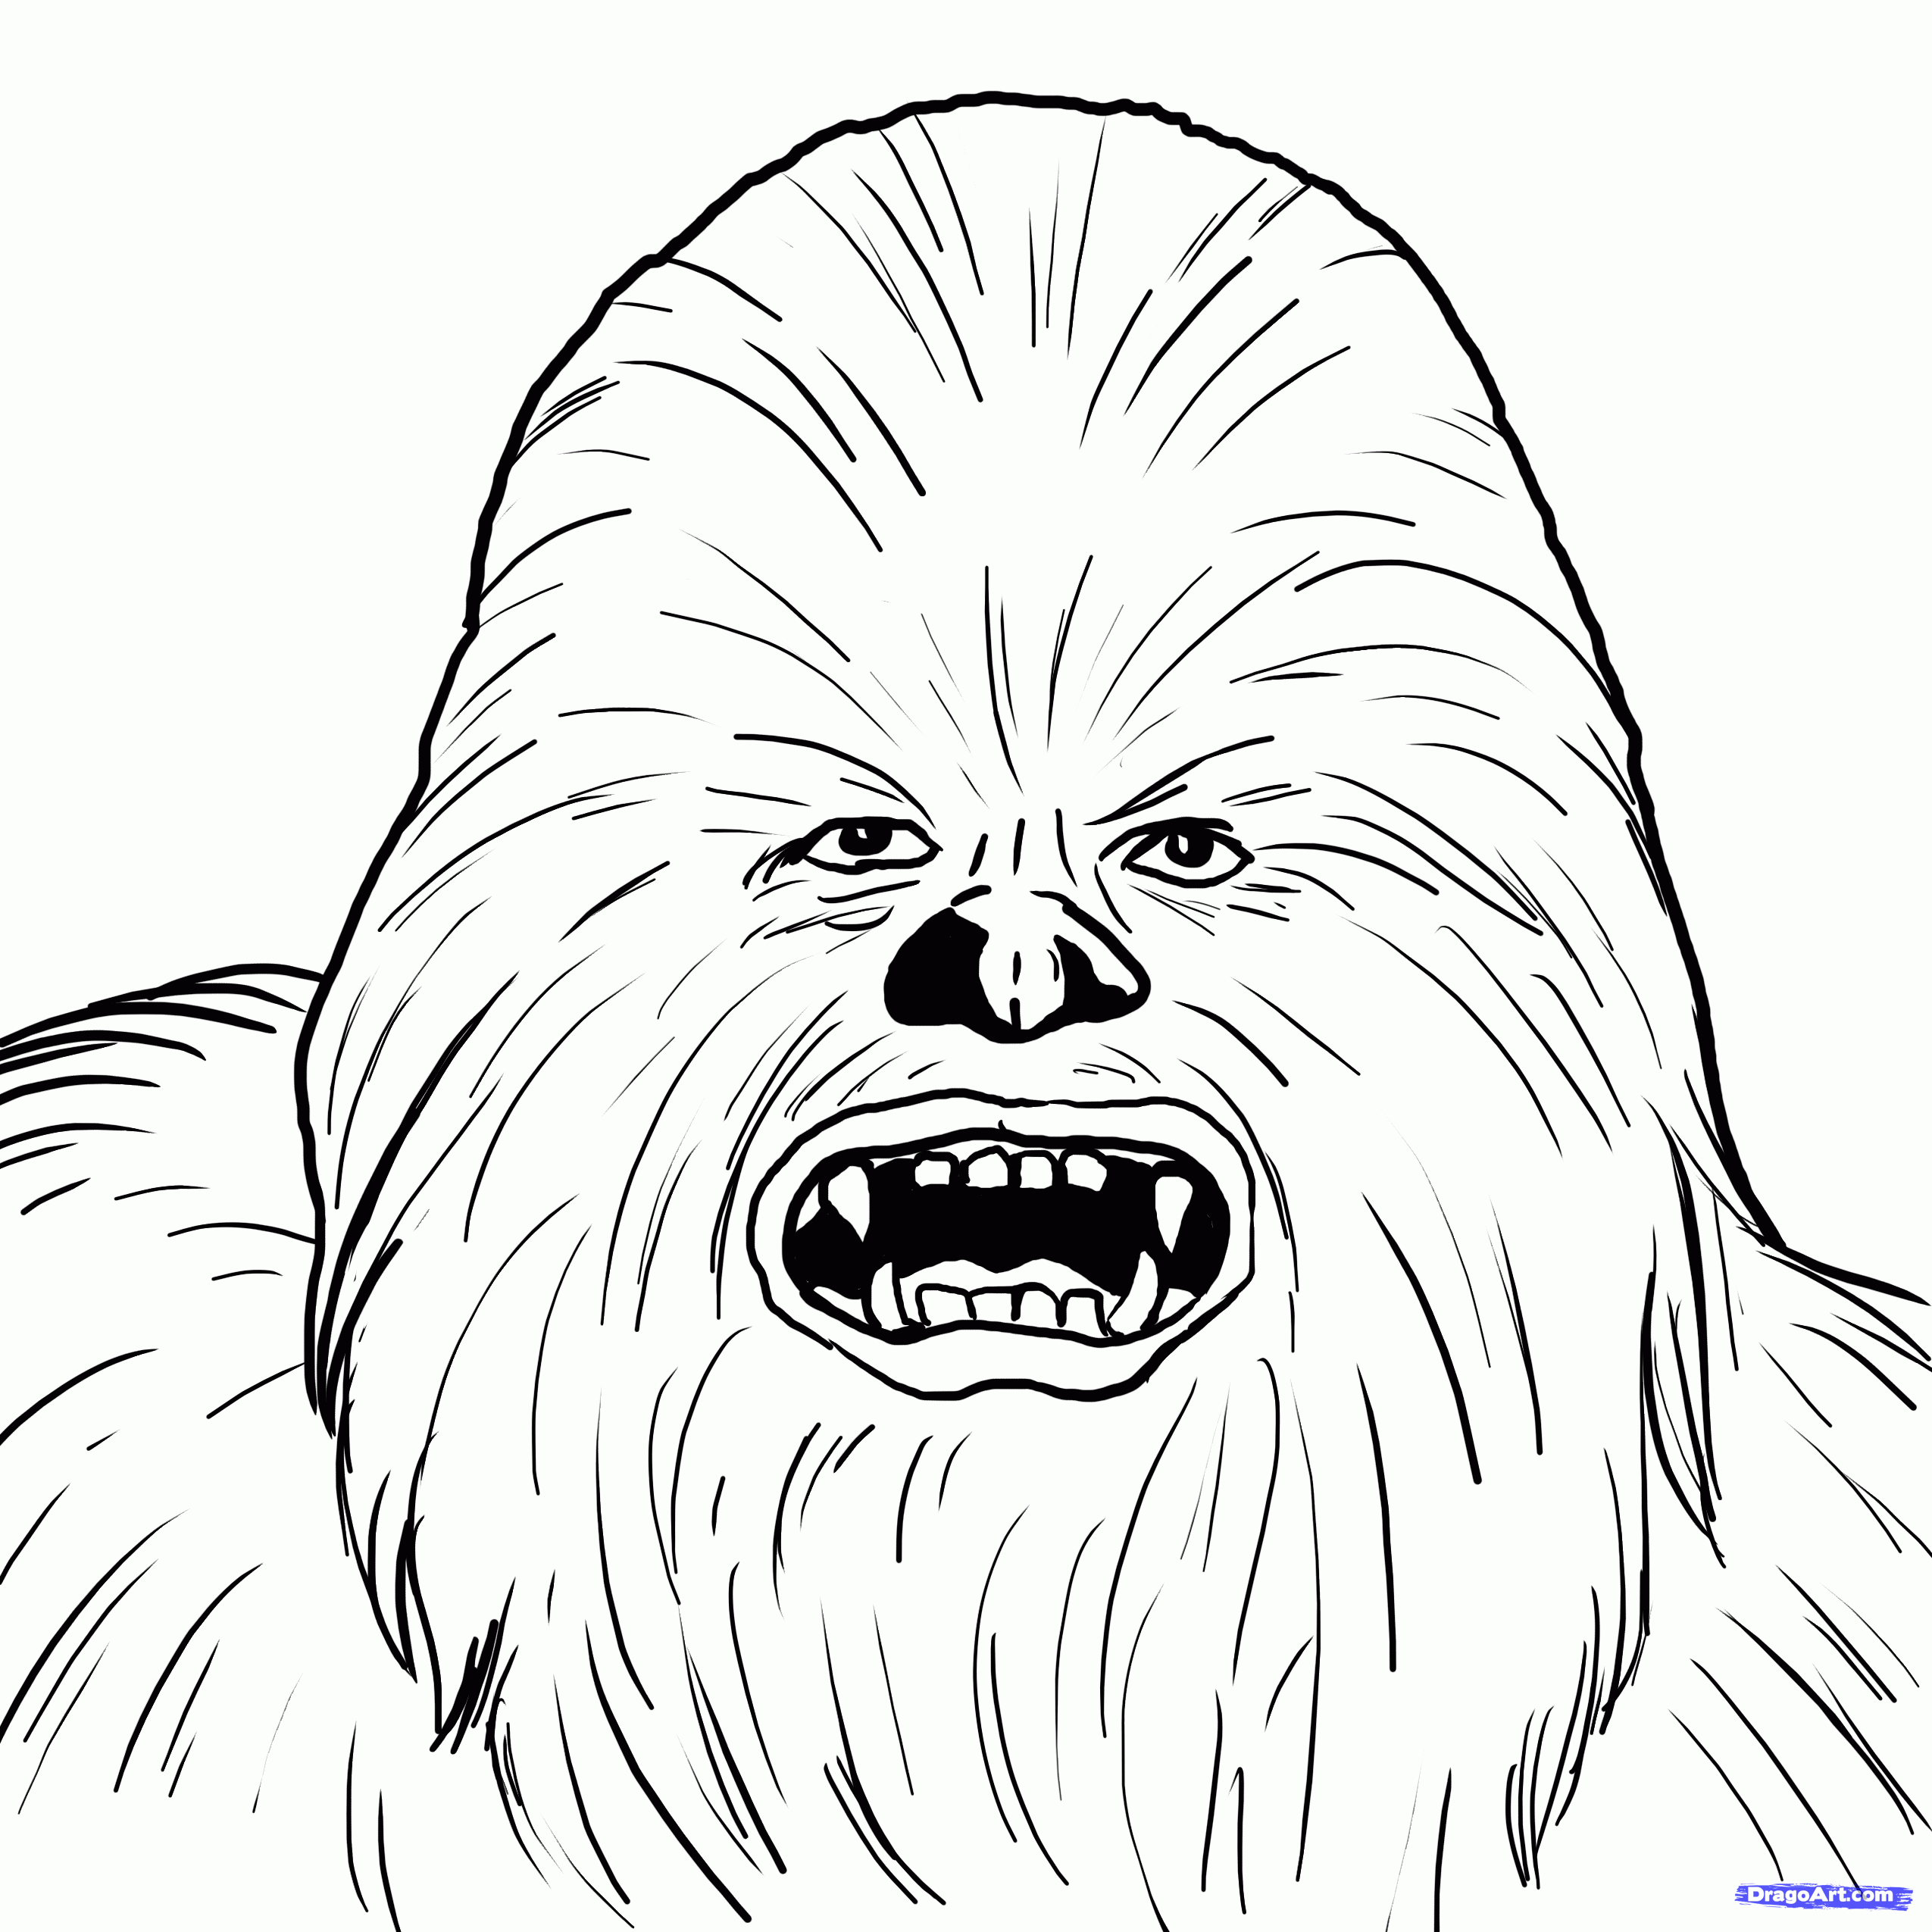 How To Draw A Wookie, Star Wars Wookie, Step by Step, Star Wars 